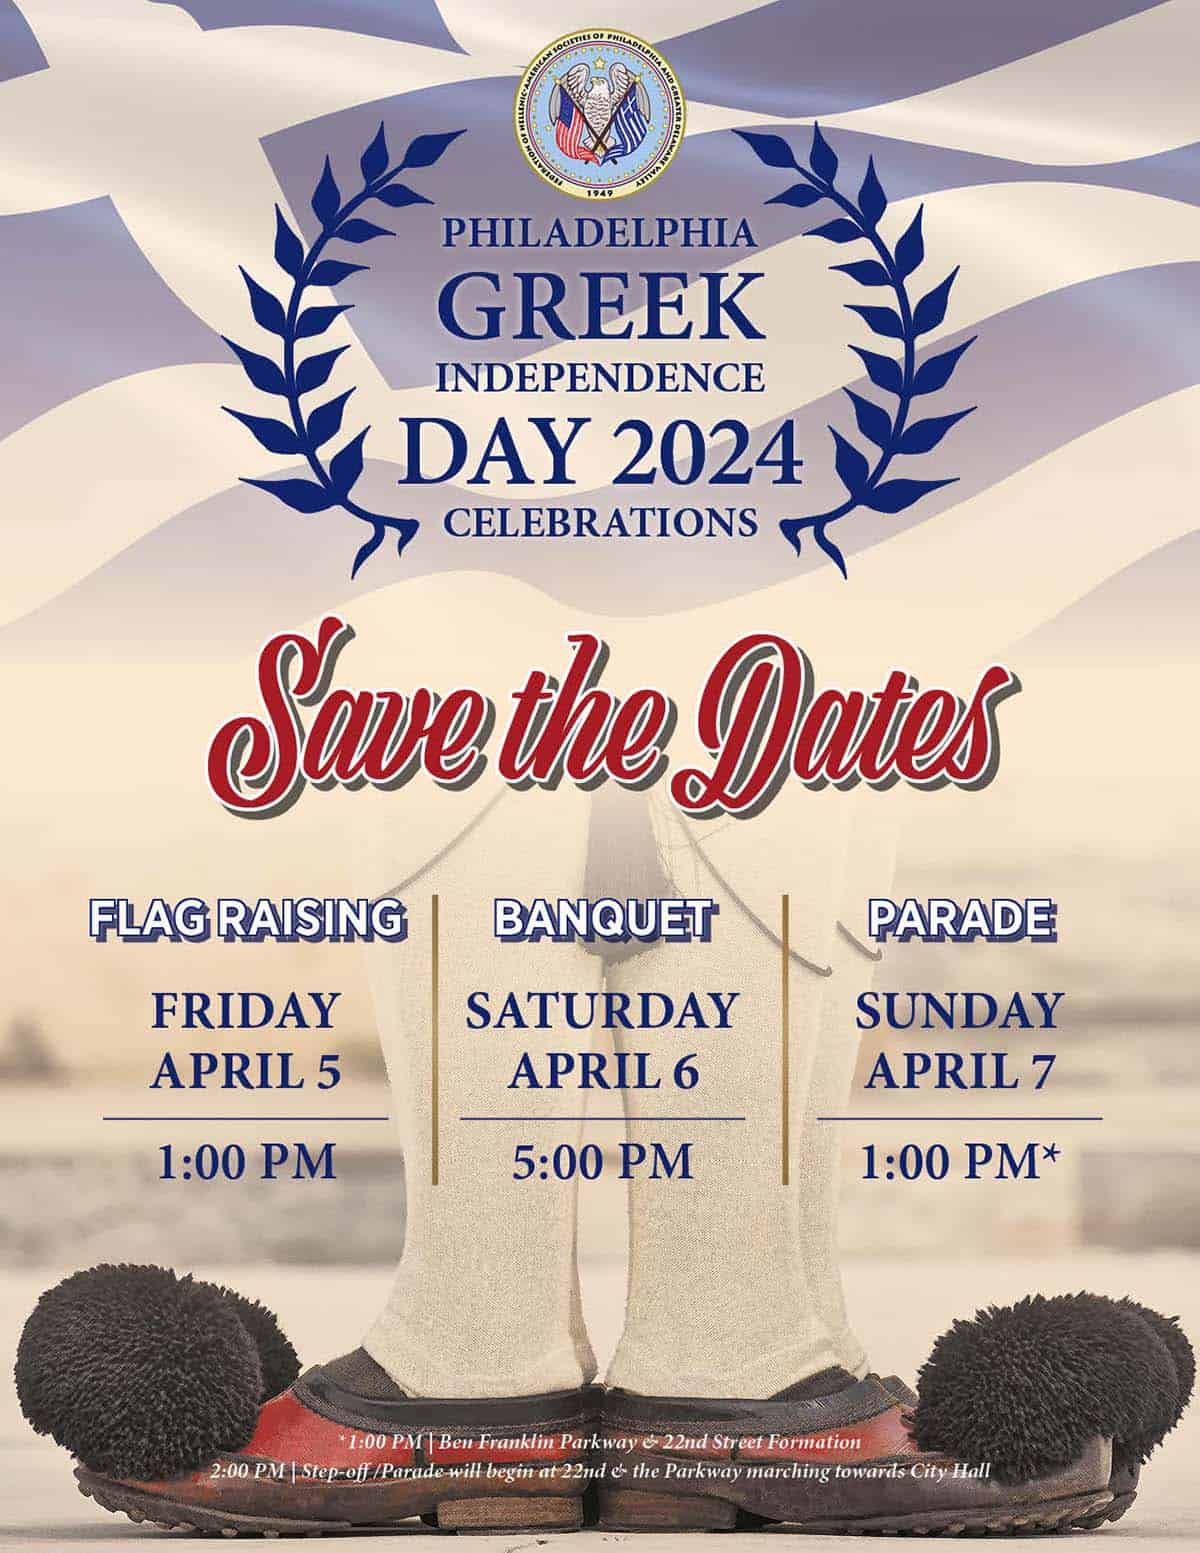 Philadelphia Greek Independence Day 2024 Celebrations Poster